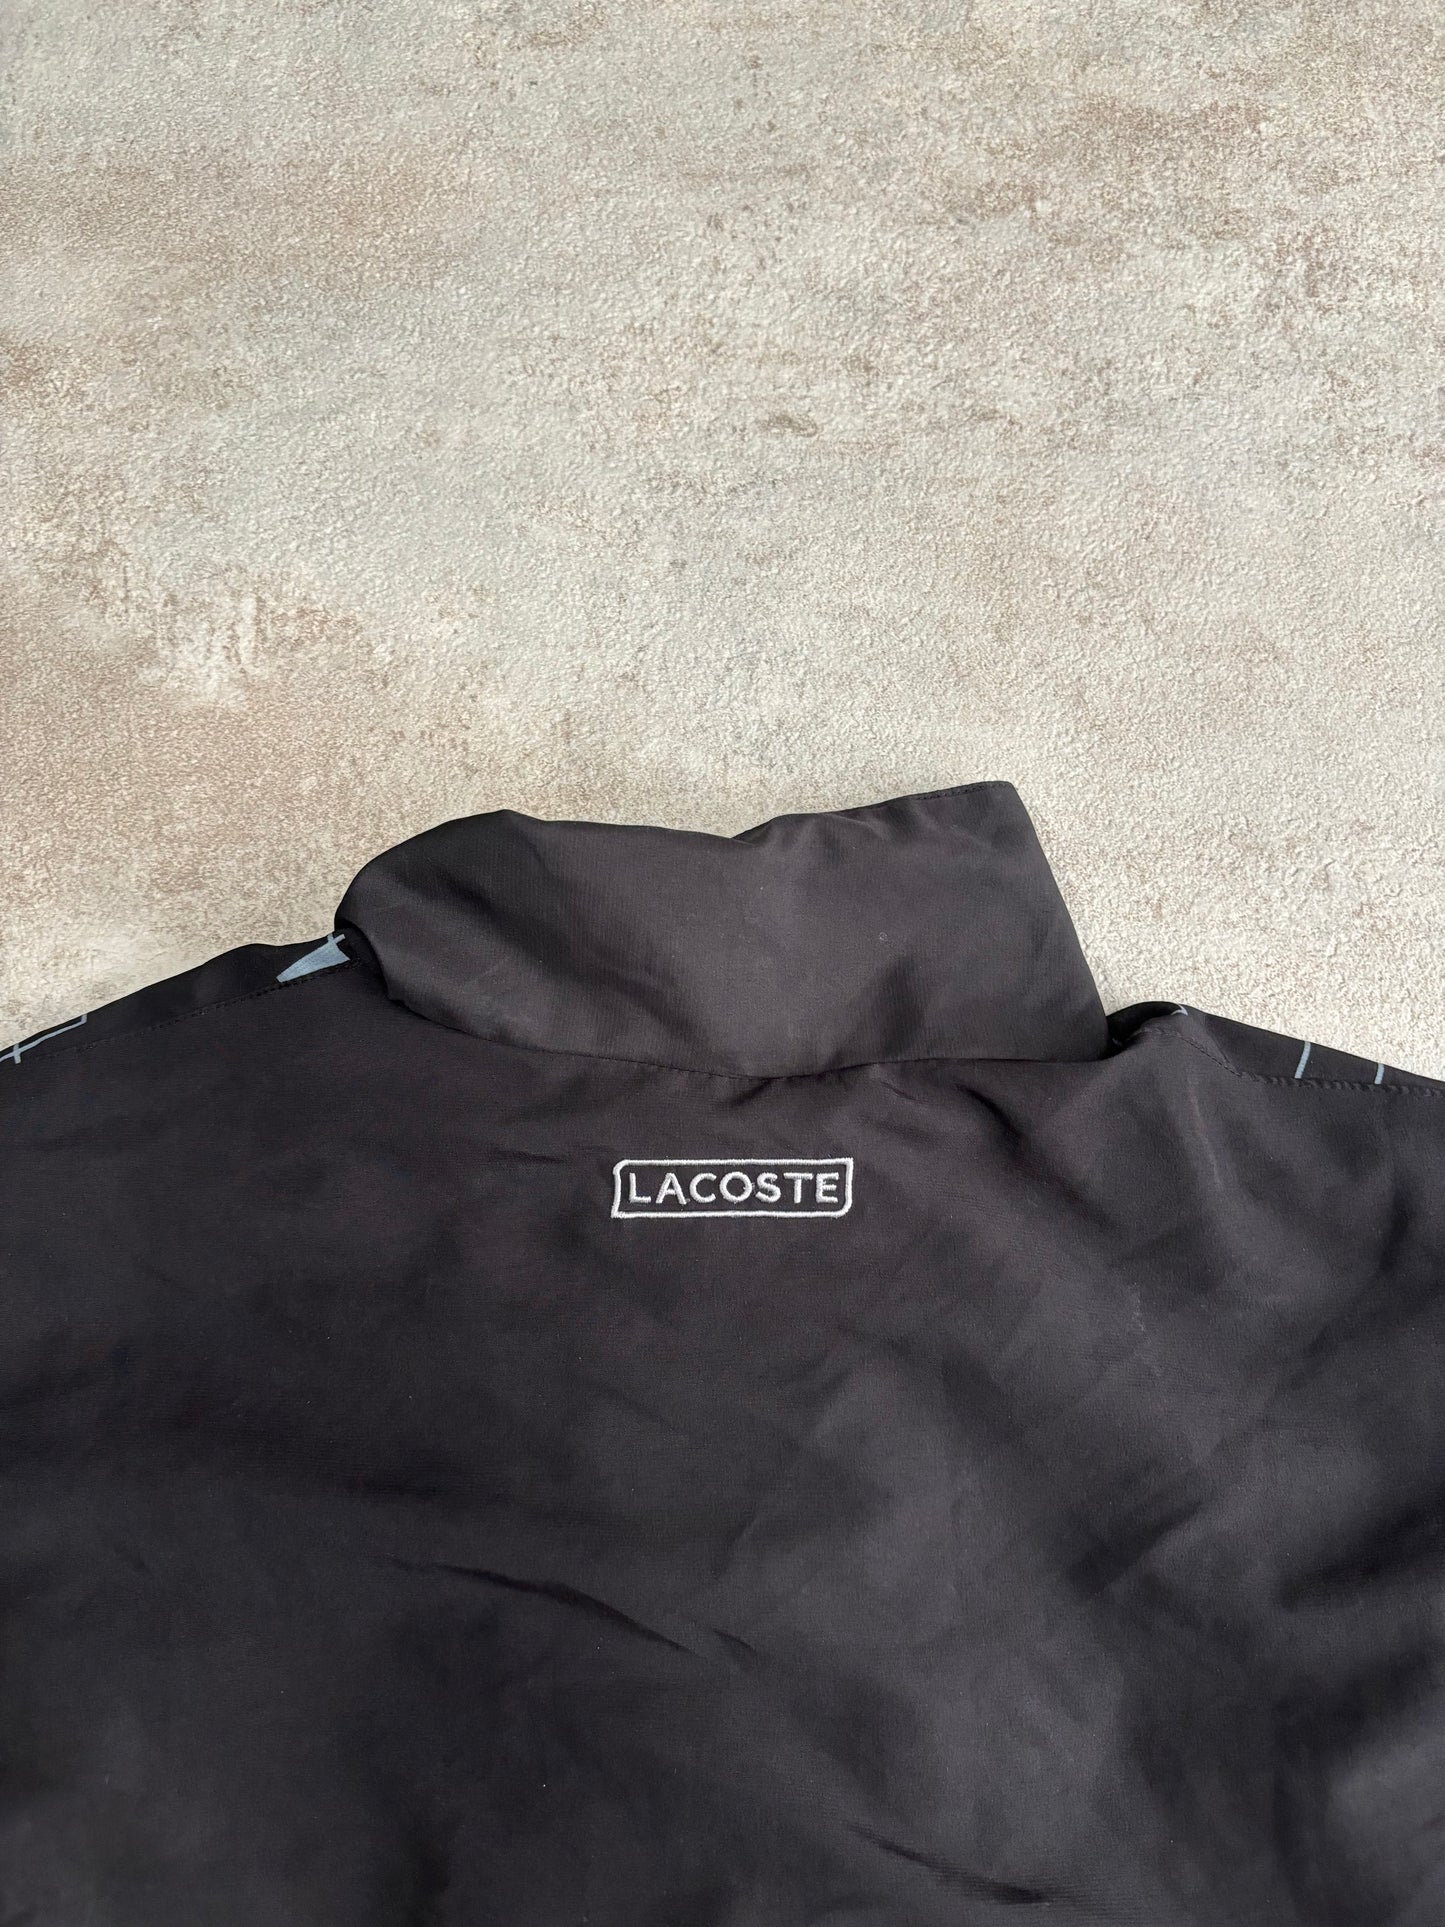 Lacoste Sport 00s Vintage Jacket - S